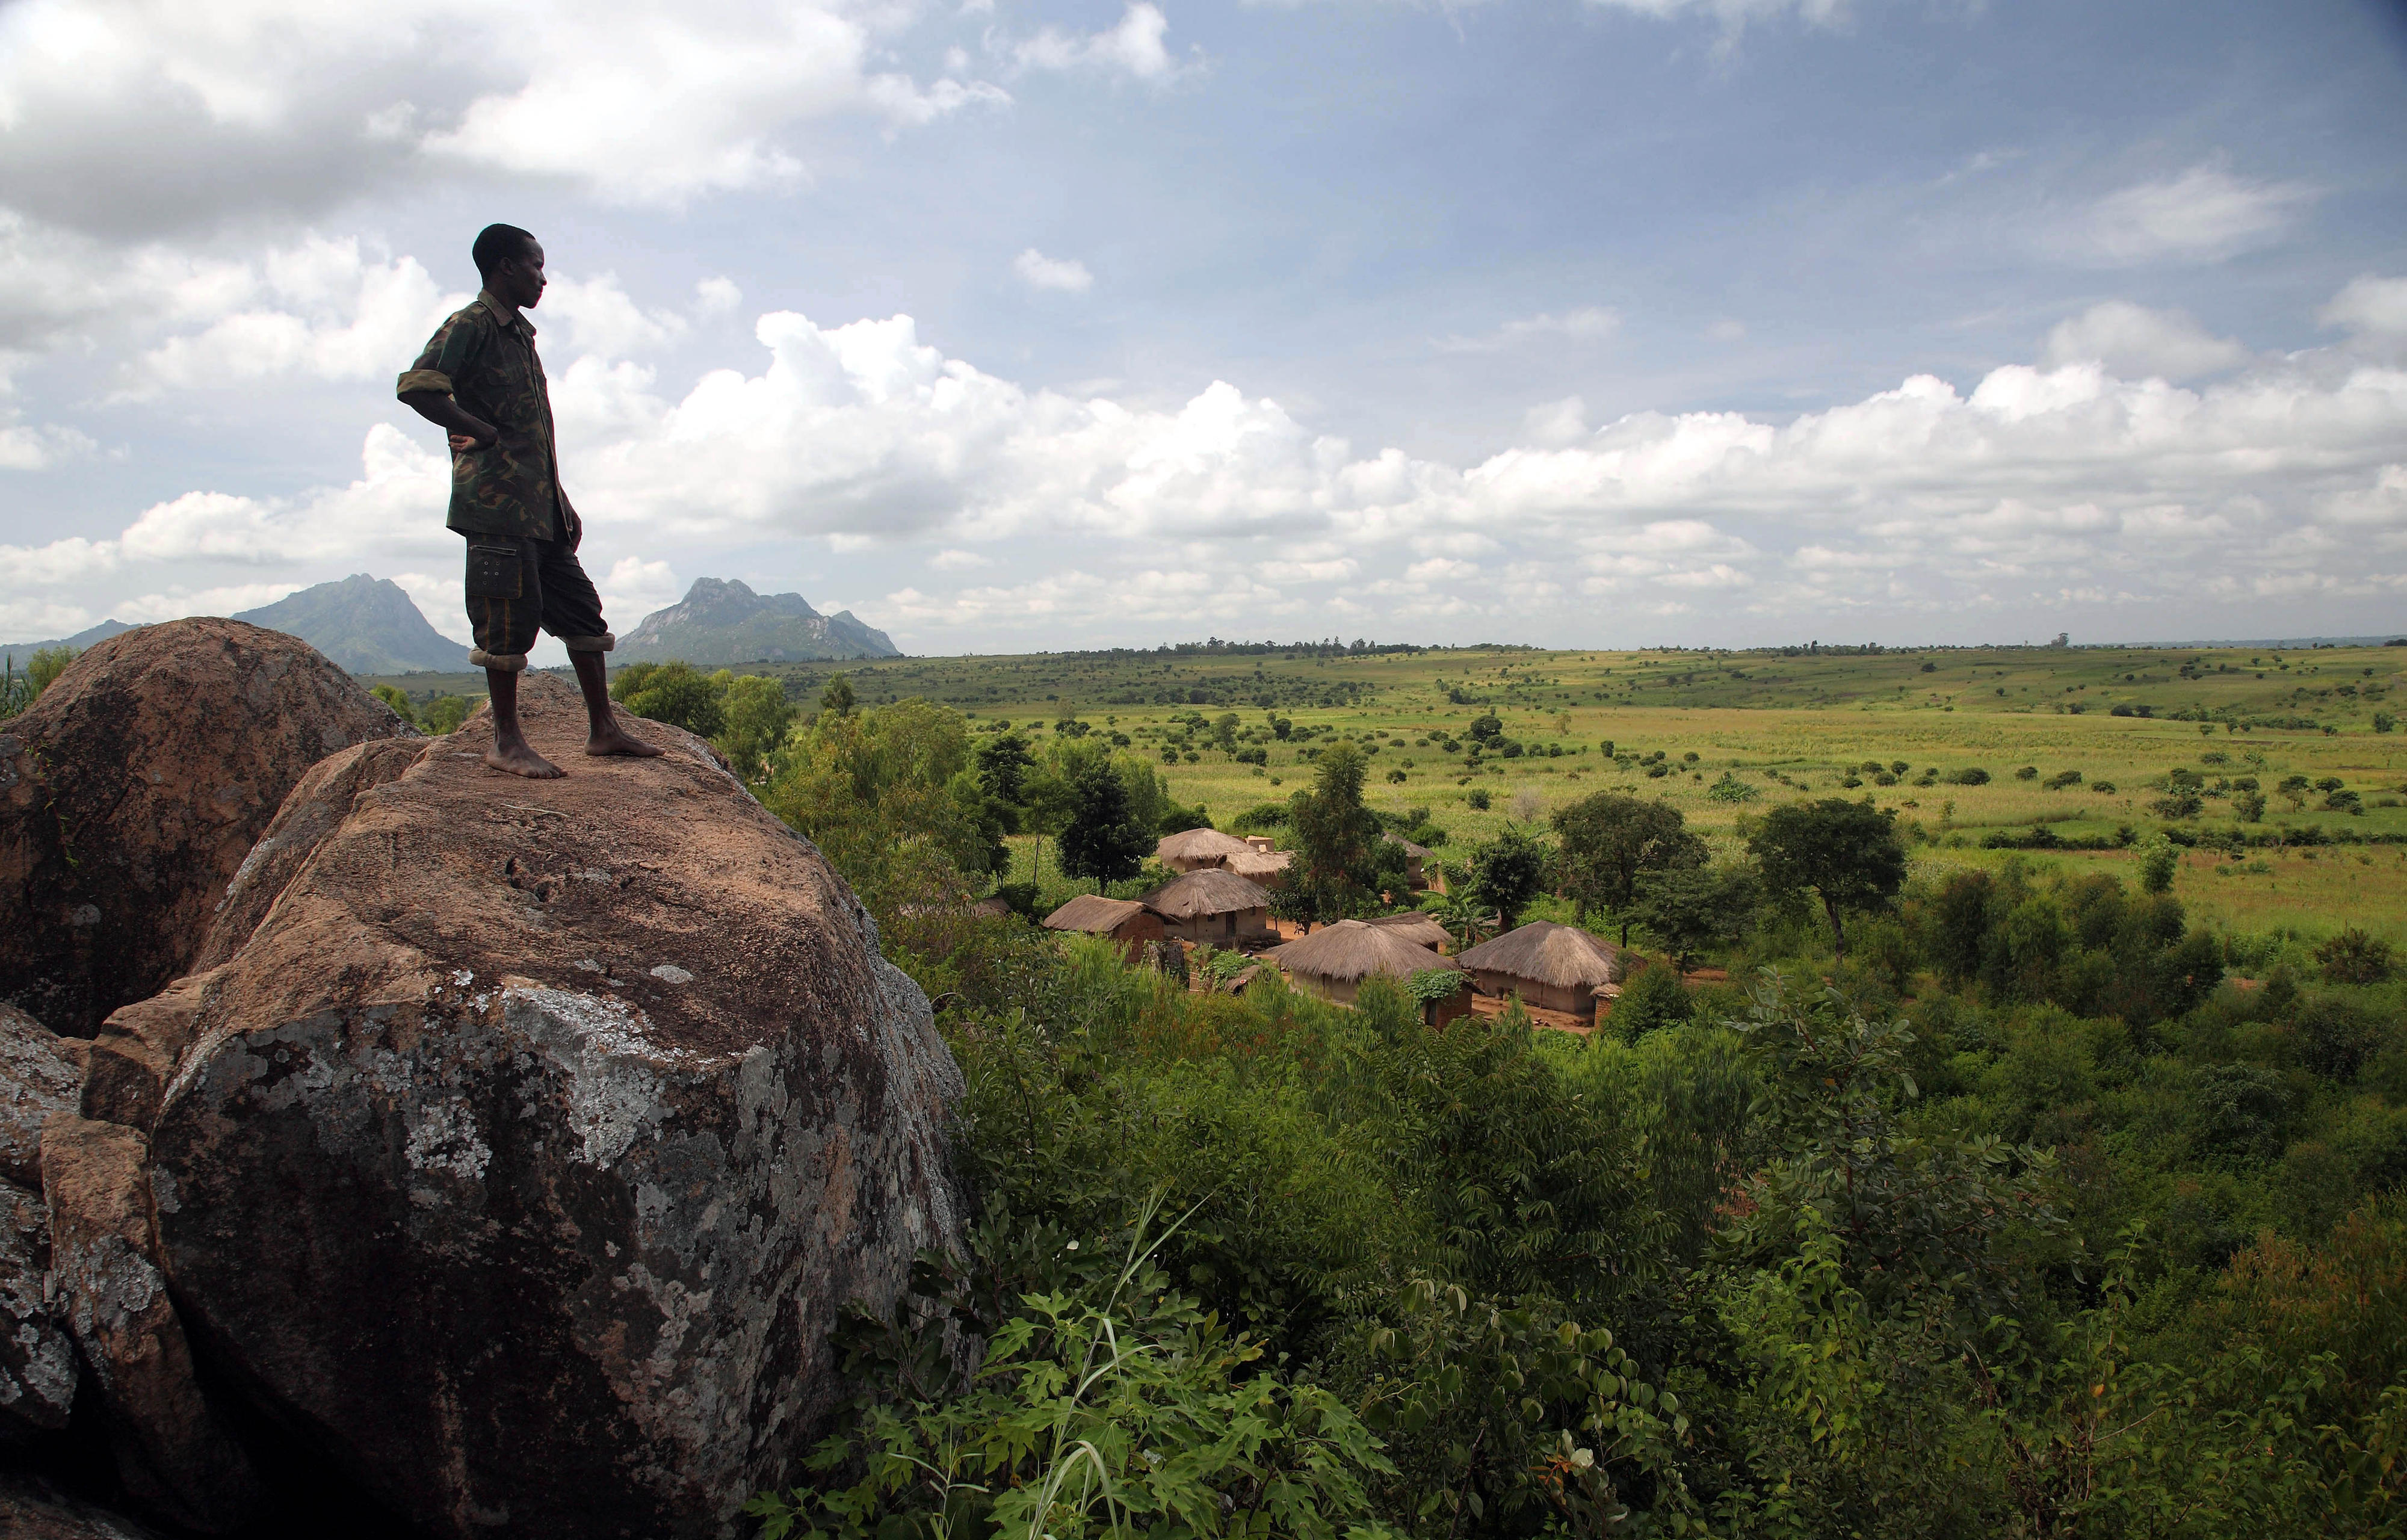 Landscape in Central Malawi